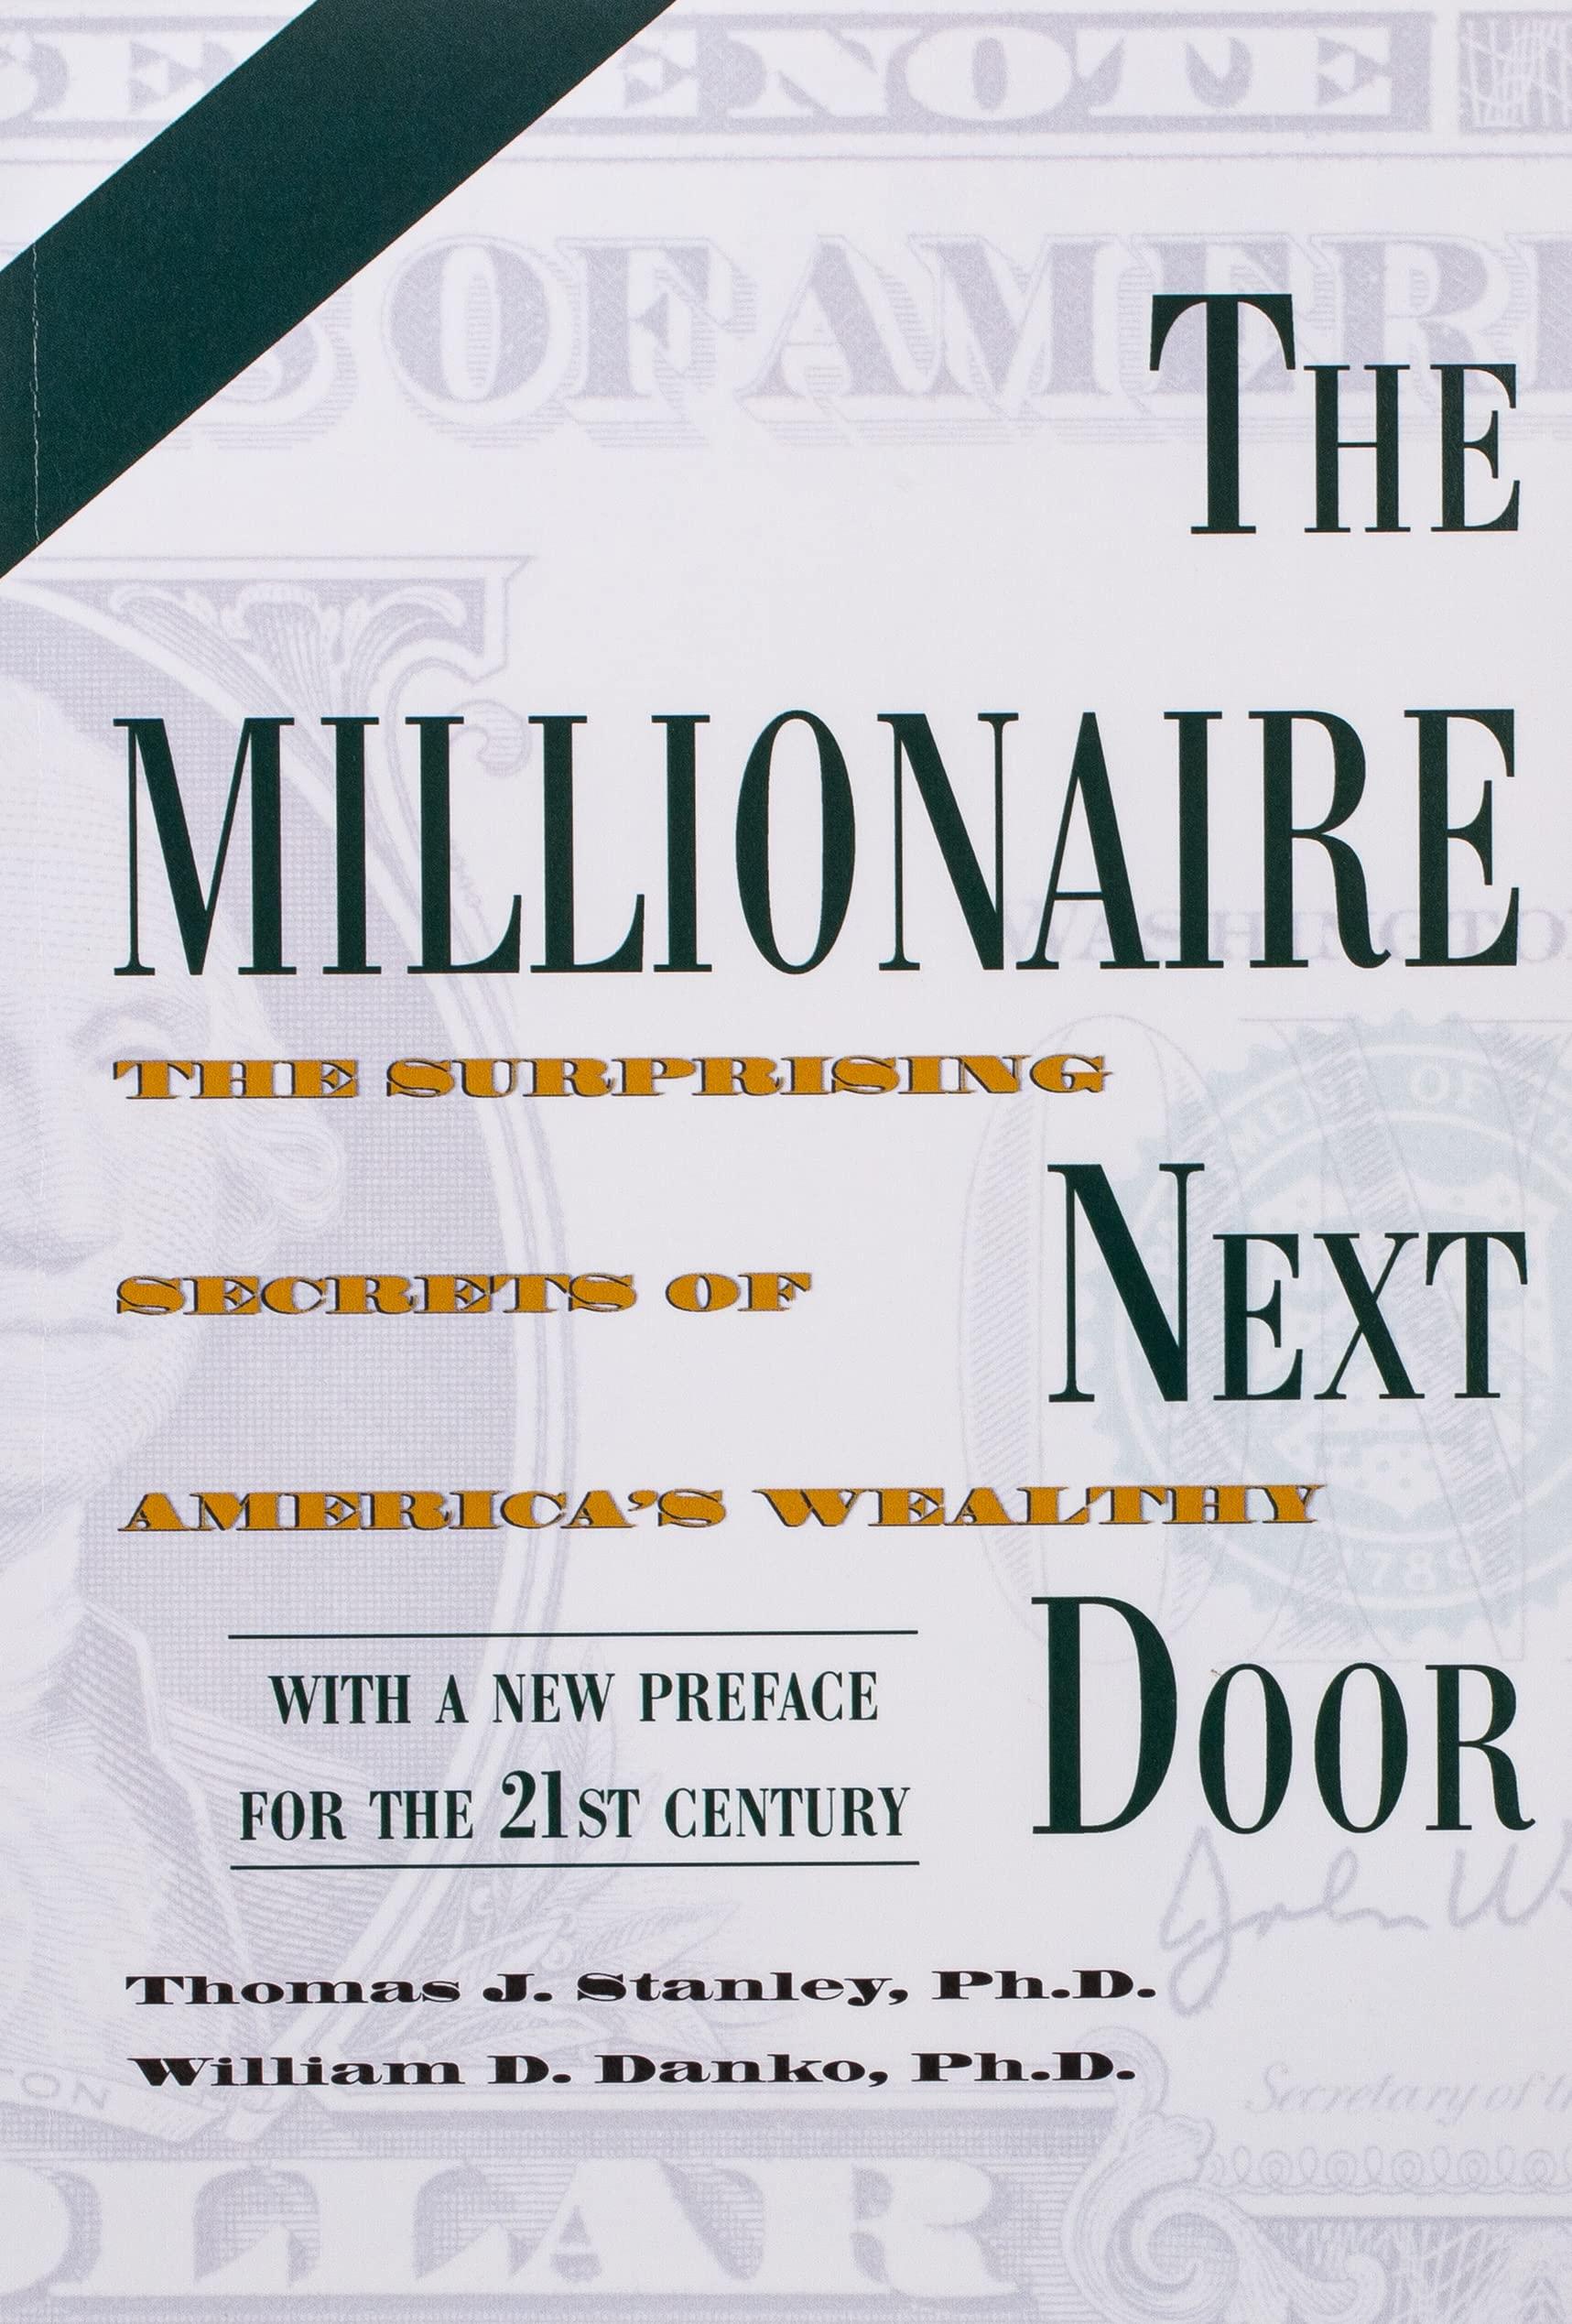 the millionaire next door the surprising secrets of americas wealthy 1st edition thomas j. stanley, william